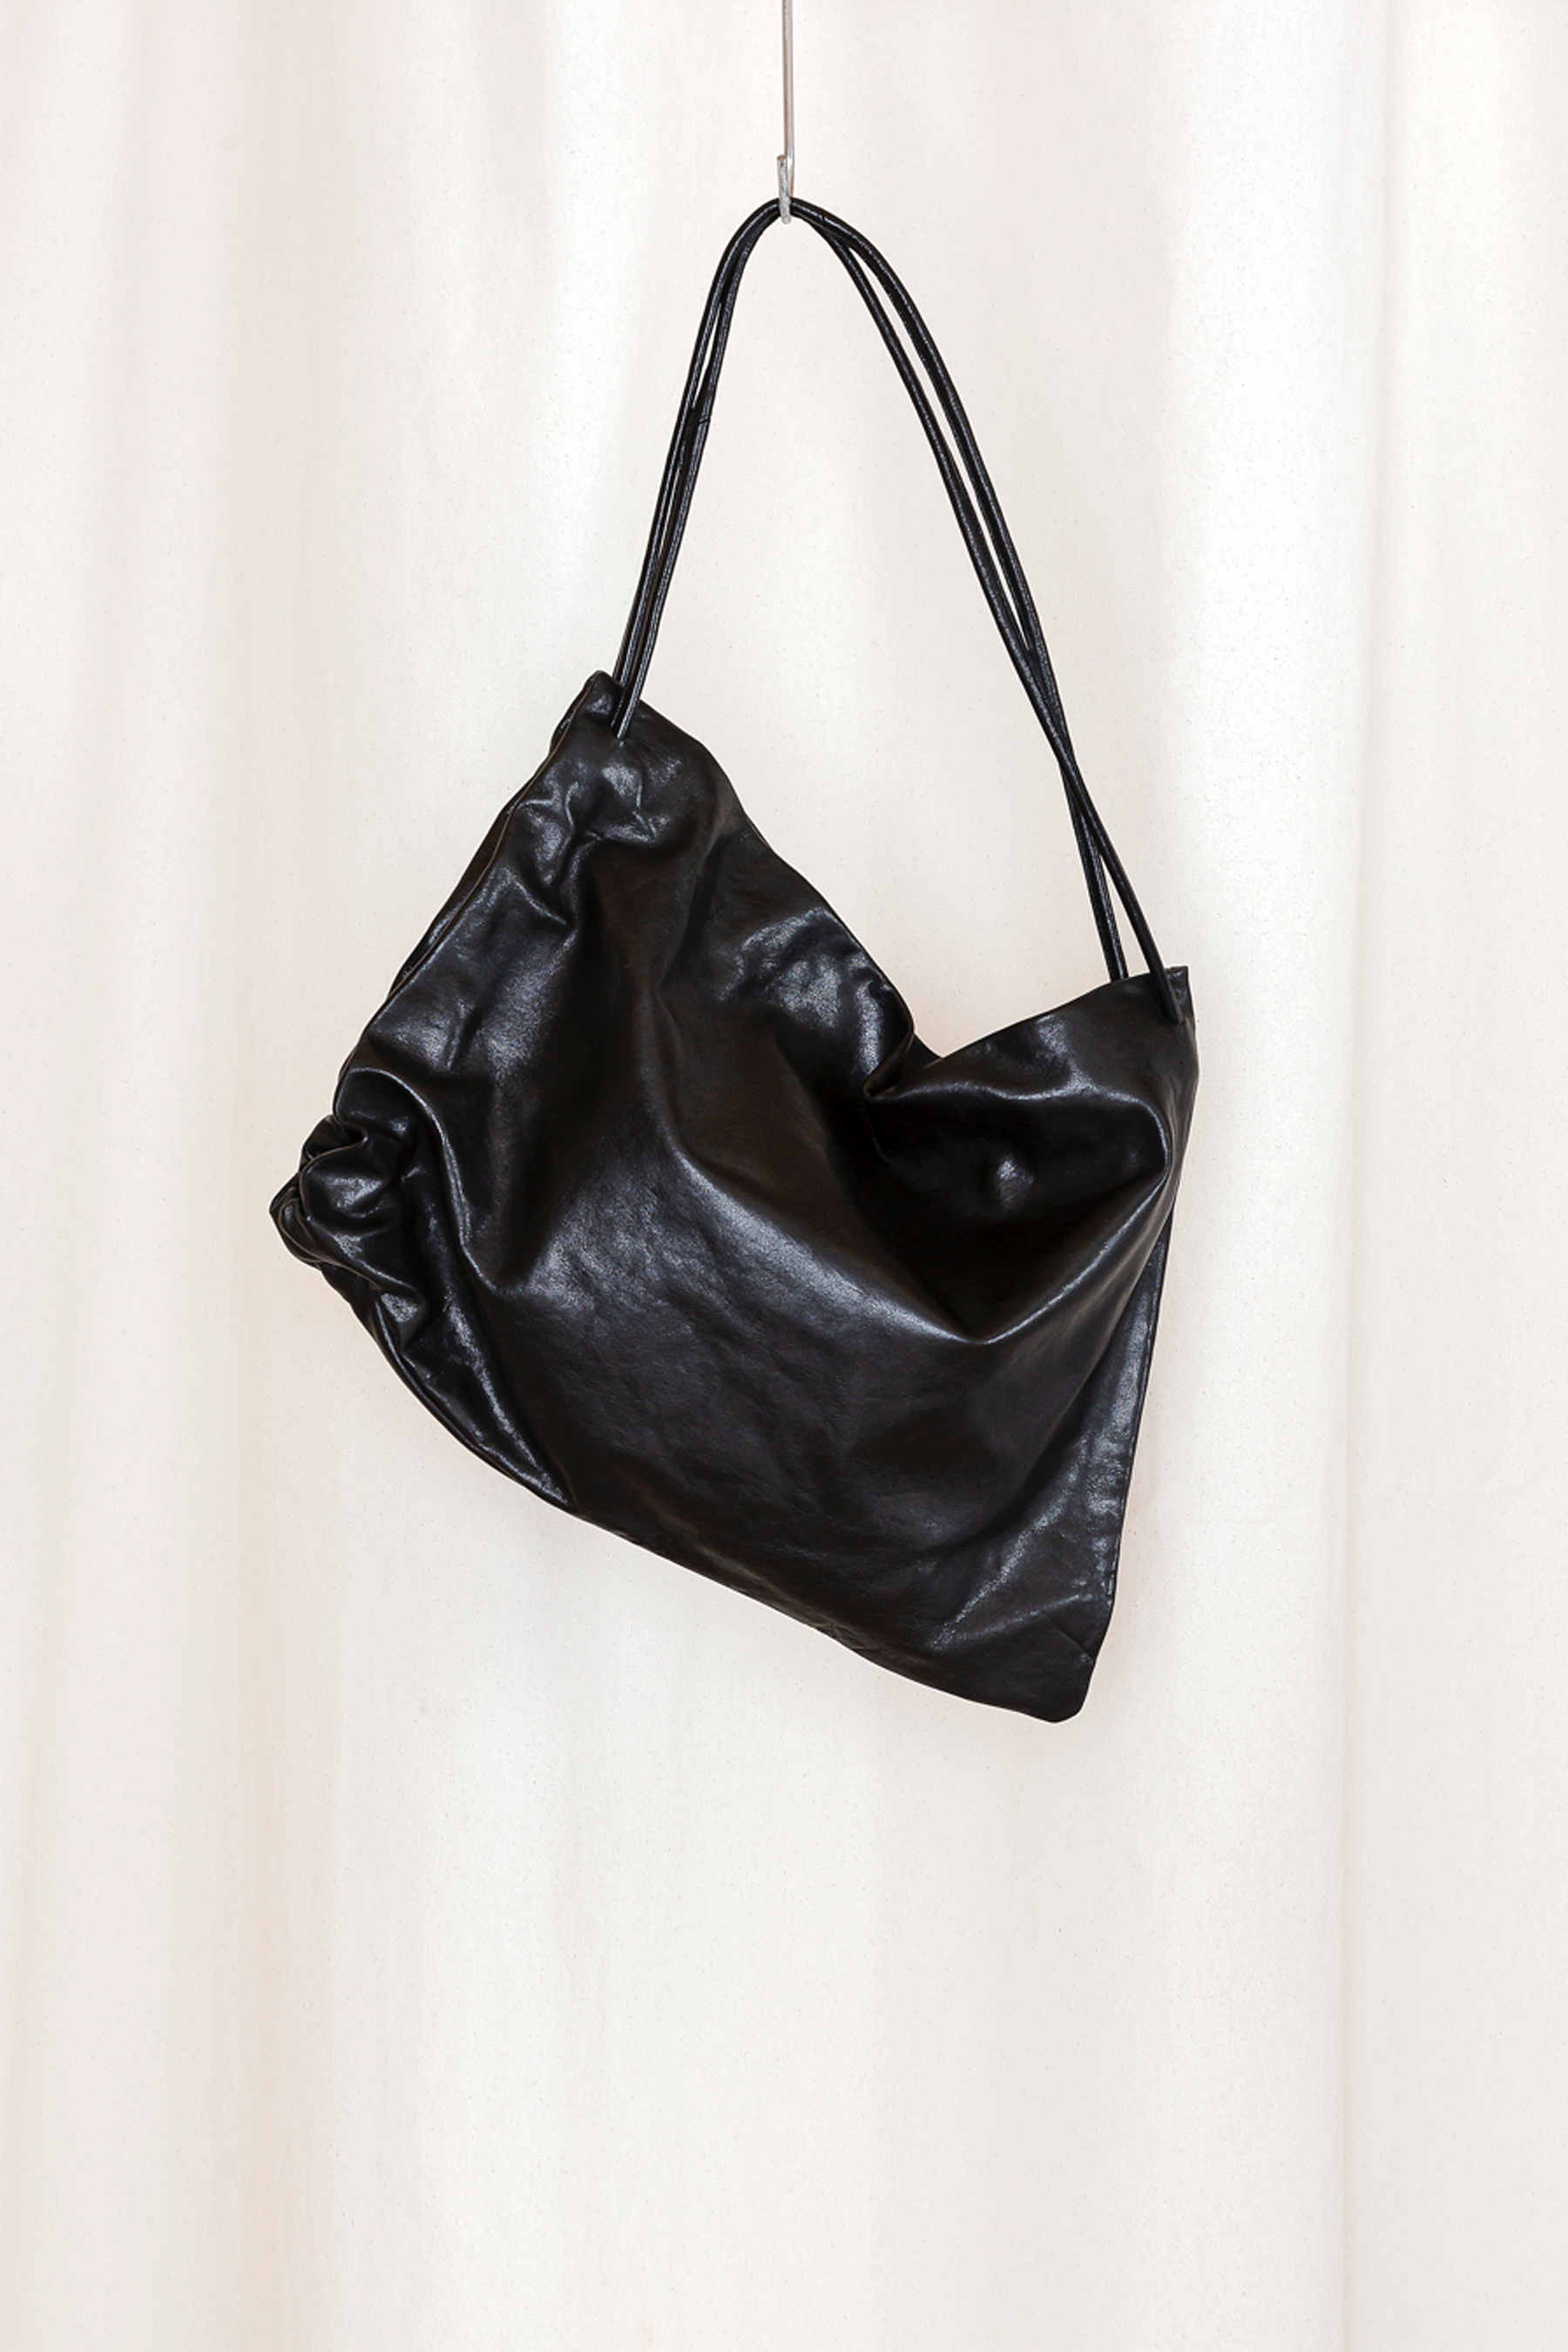 No.131 Black Leather Gathered Crossed Bag